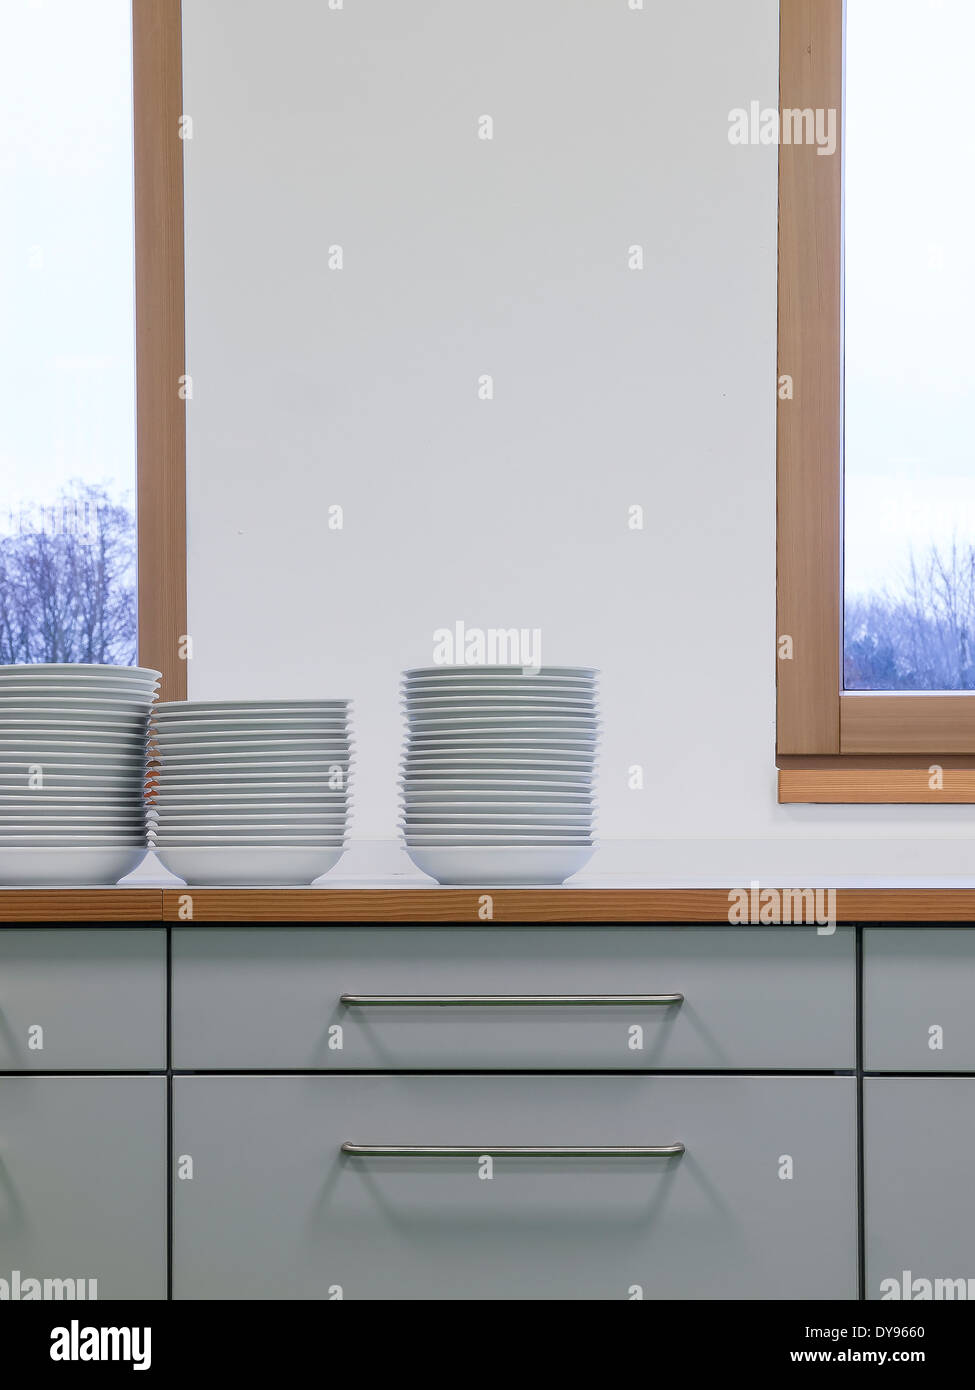 Dishware on kitchen cupboard Stock Photo